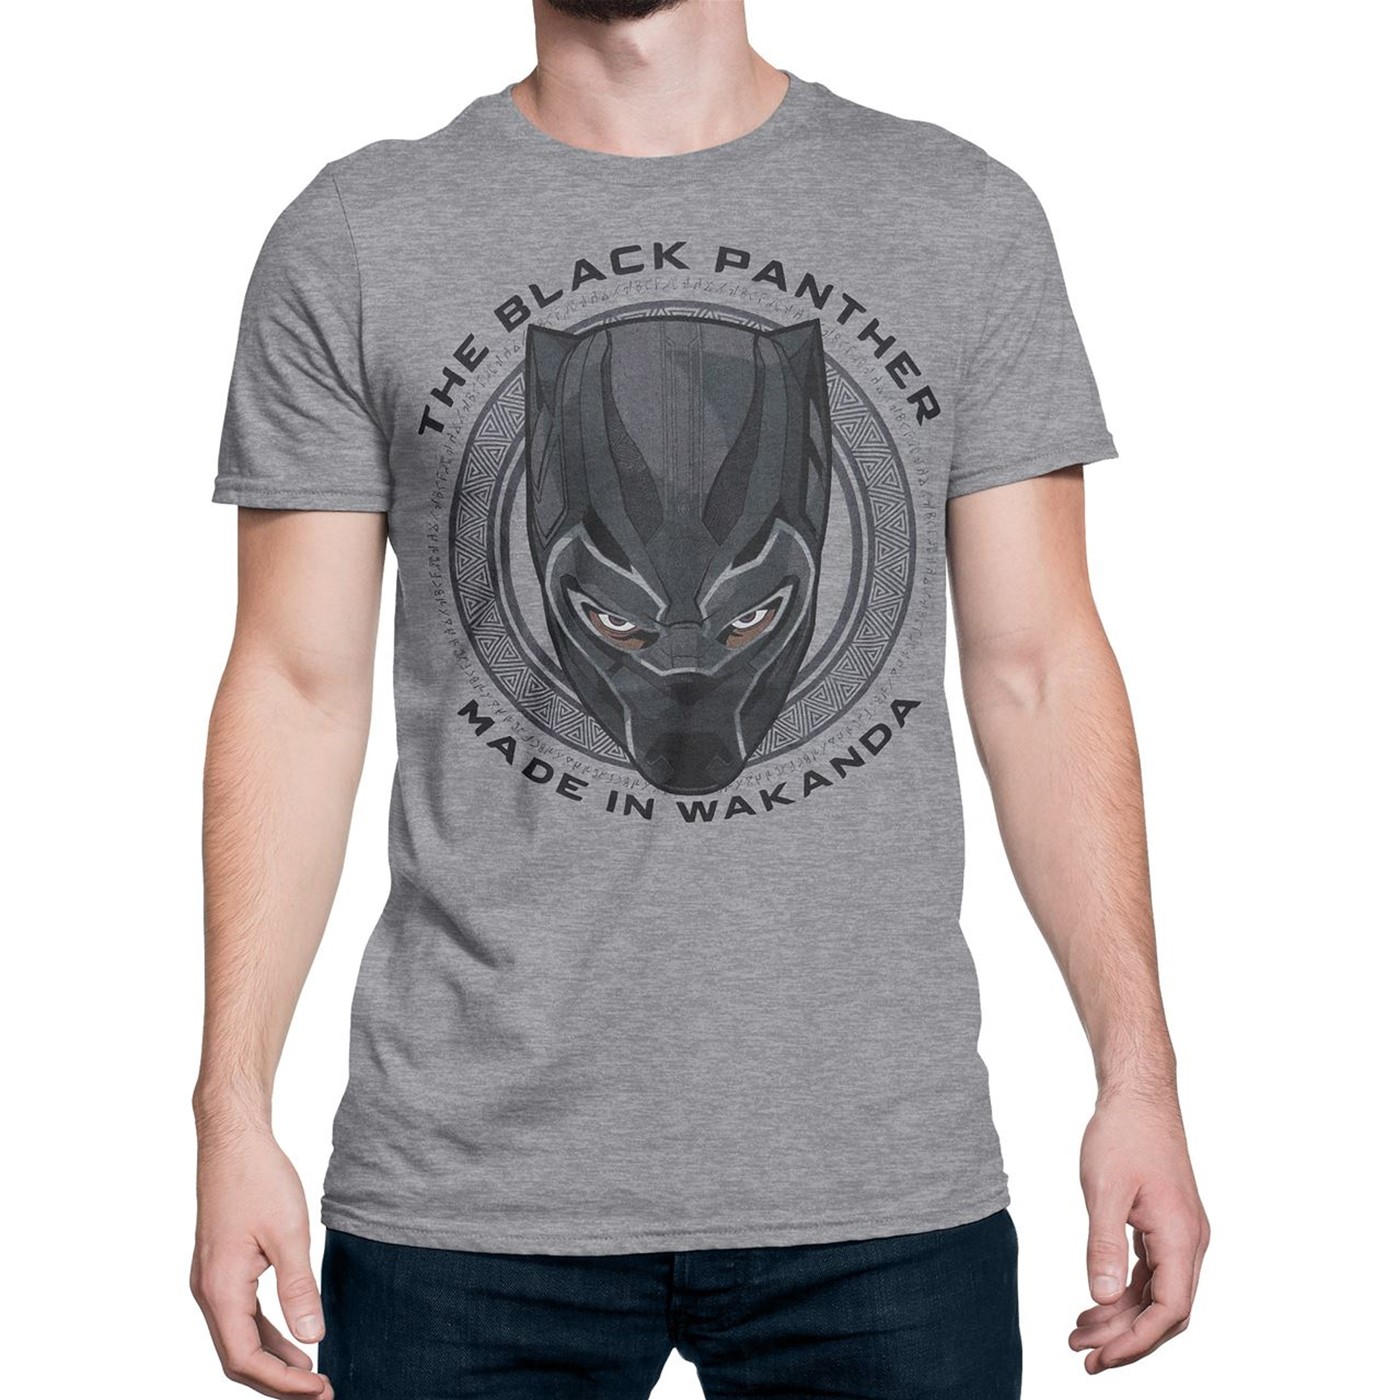 Black Panther Made in Wakanda Men's T-Shirt